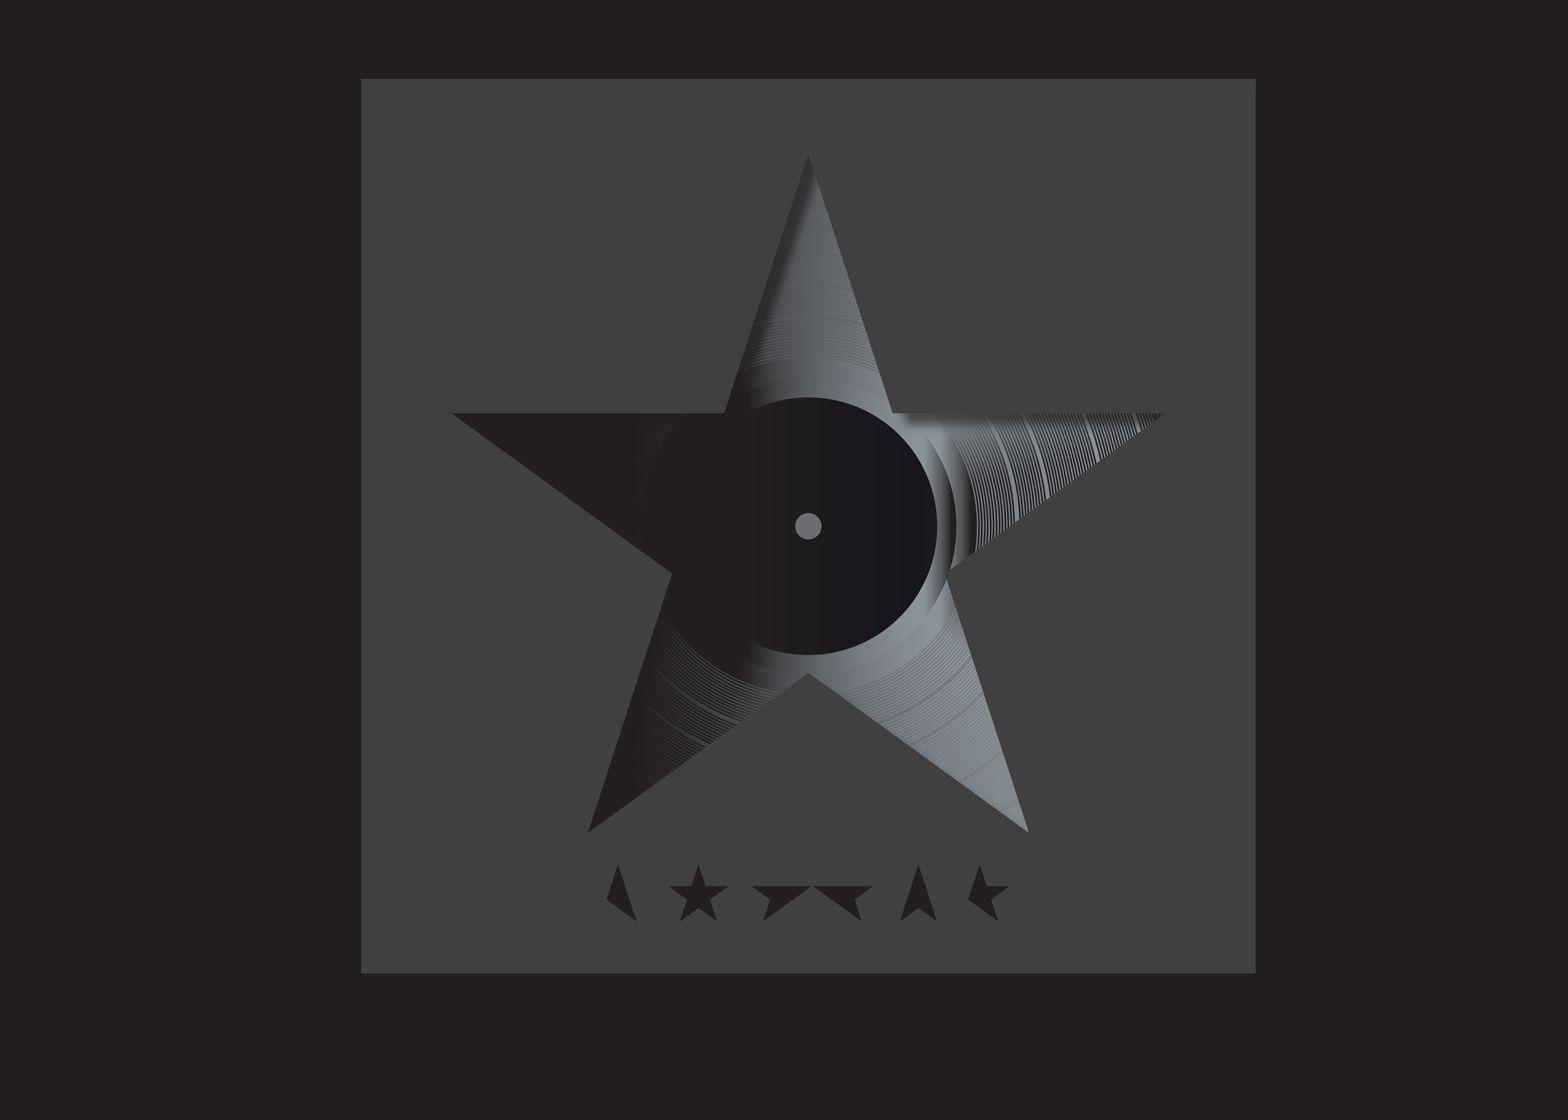 Black Star in Circle Logo - David Bowie was facing his own mortality says Barnbrook